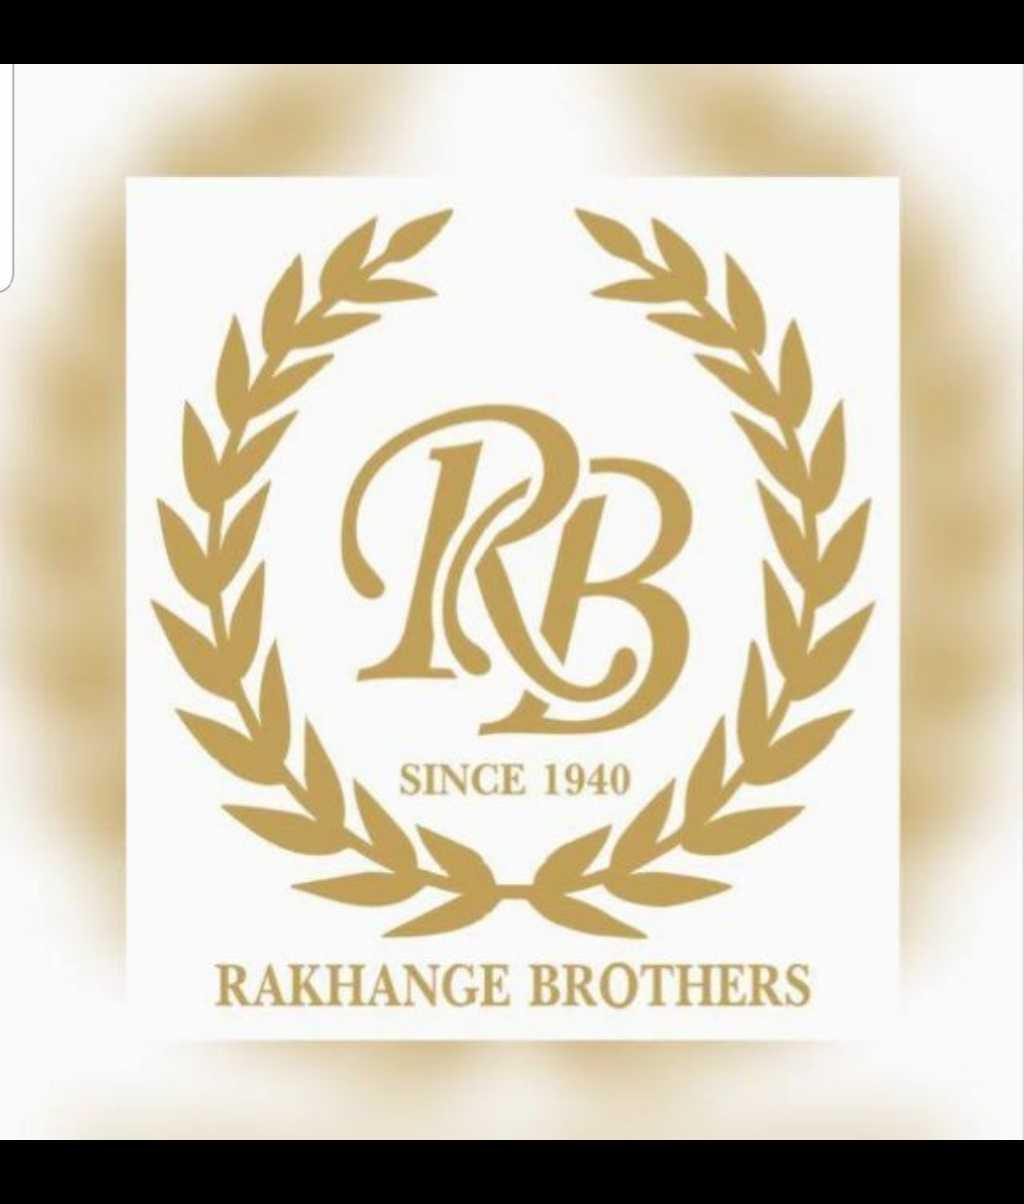 Rakhange Brothers